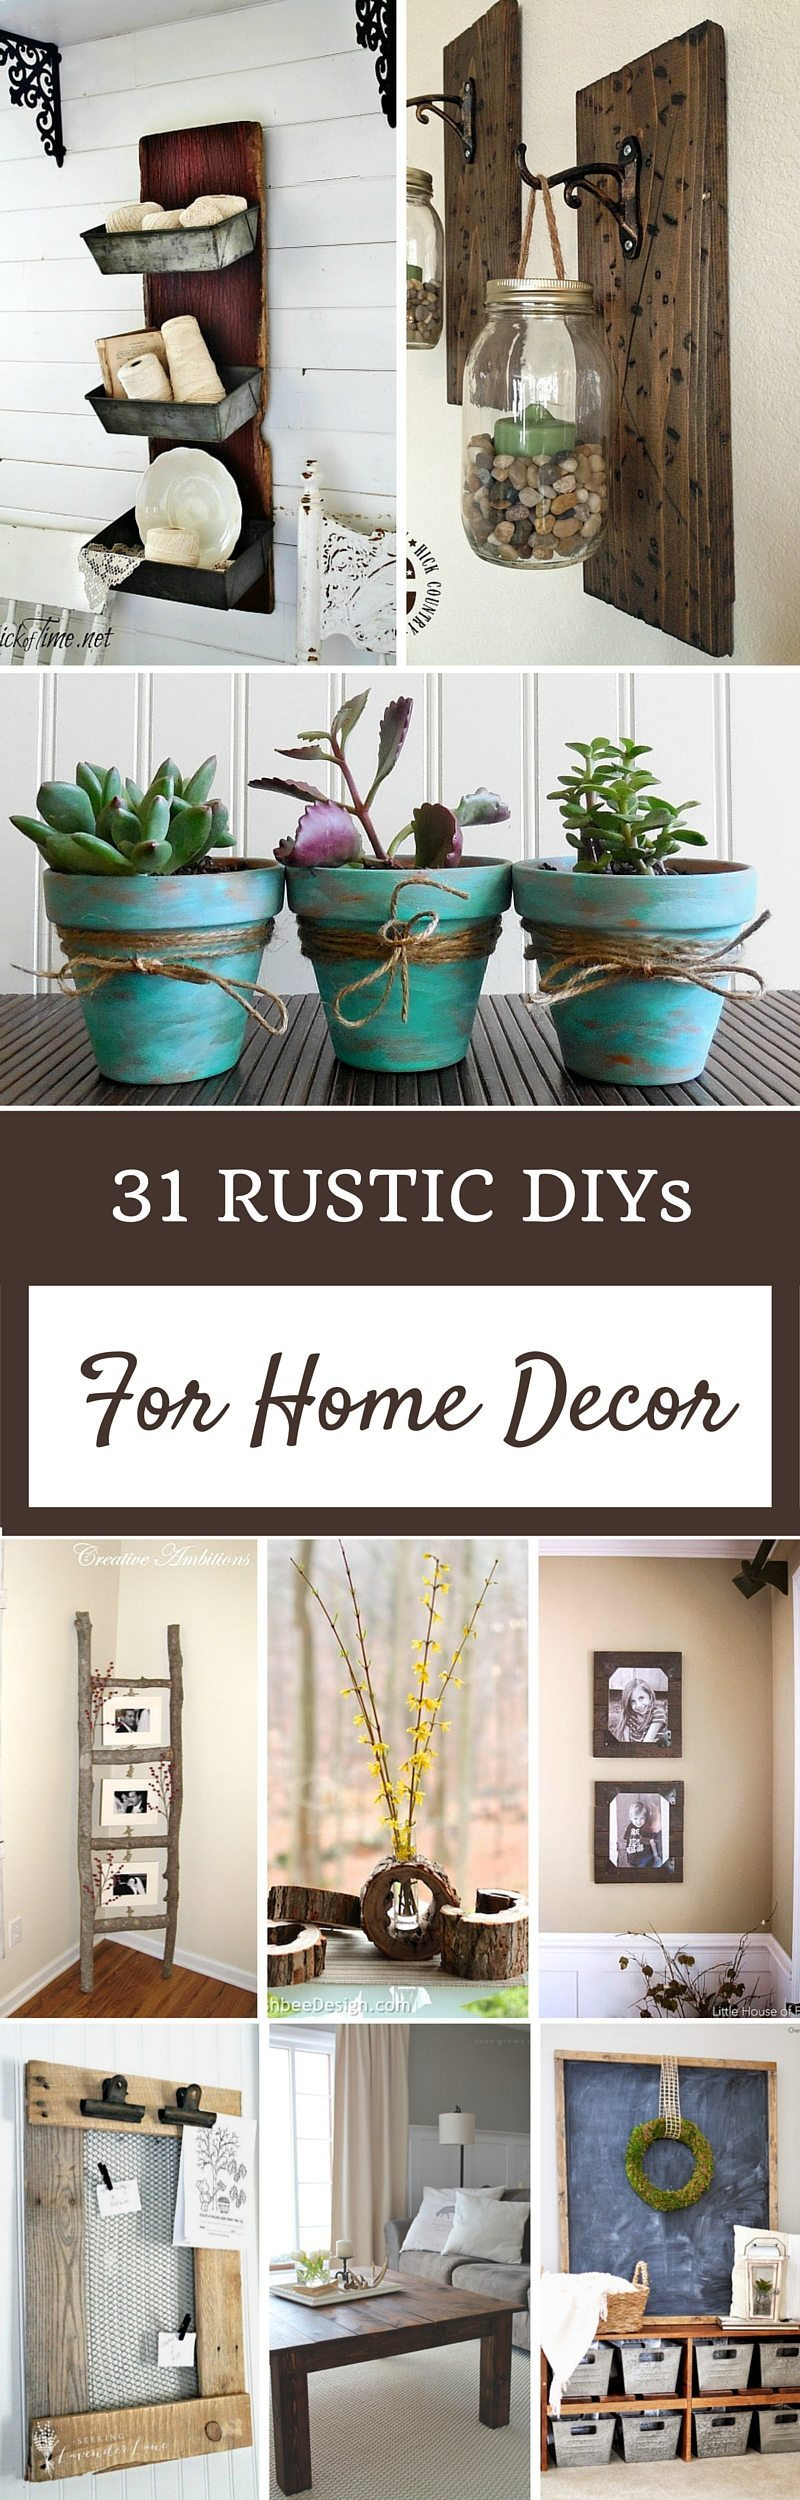 Pinterest Diy Home Decor Ideas
 Rustic Home Decor Ideas